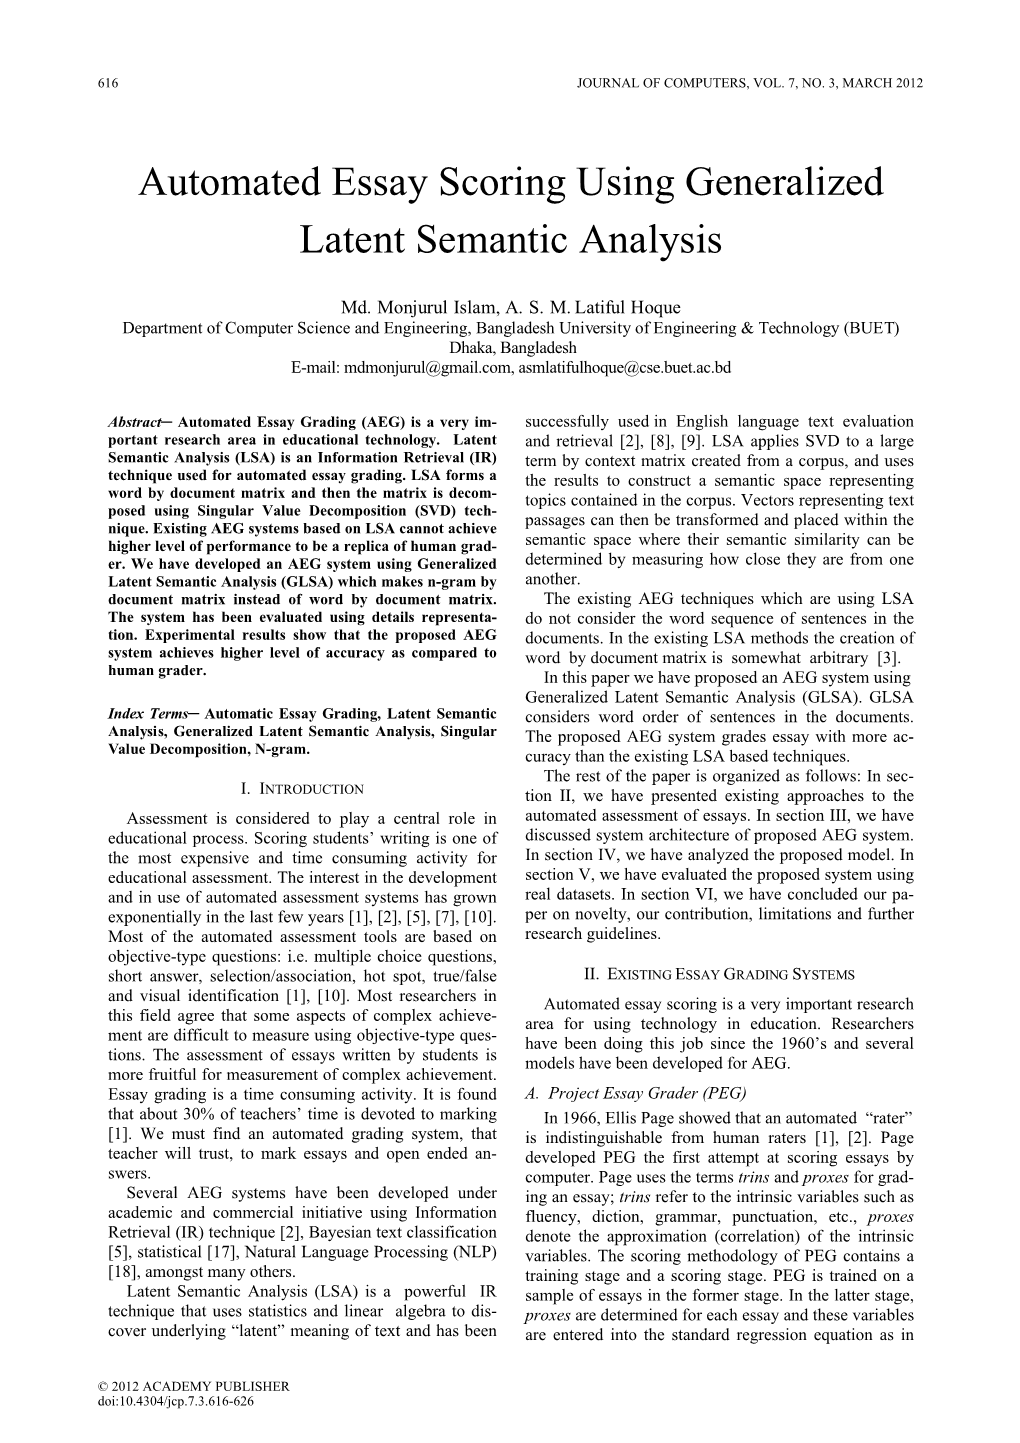 Automated Essay Scoring Using Generalized Latent Semantic Analysis